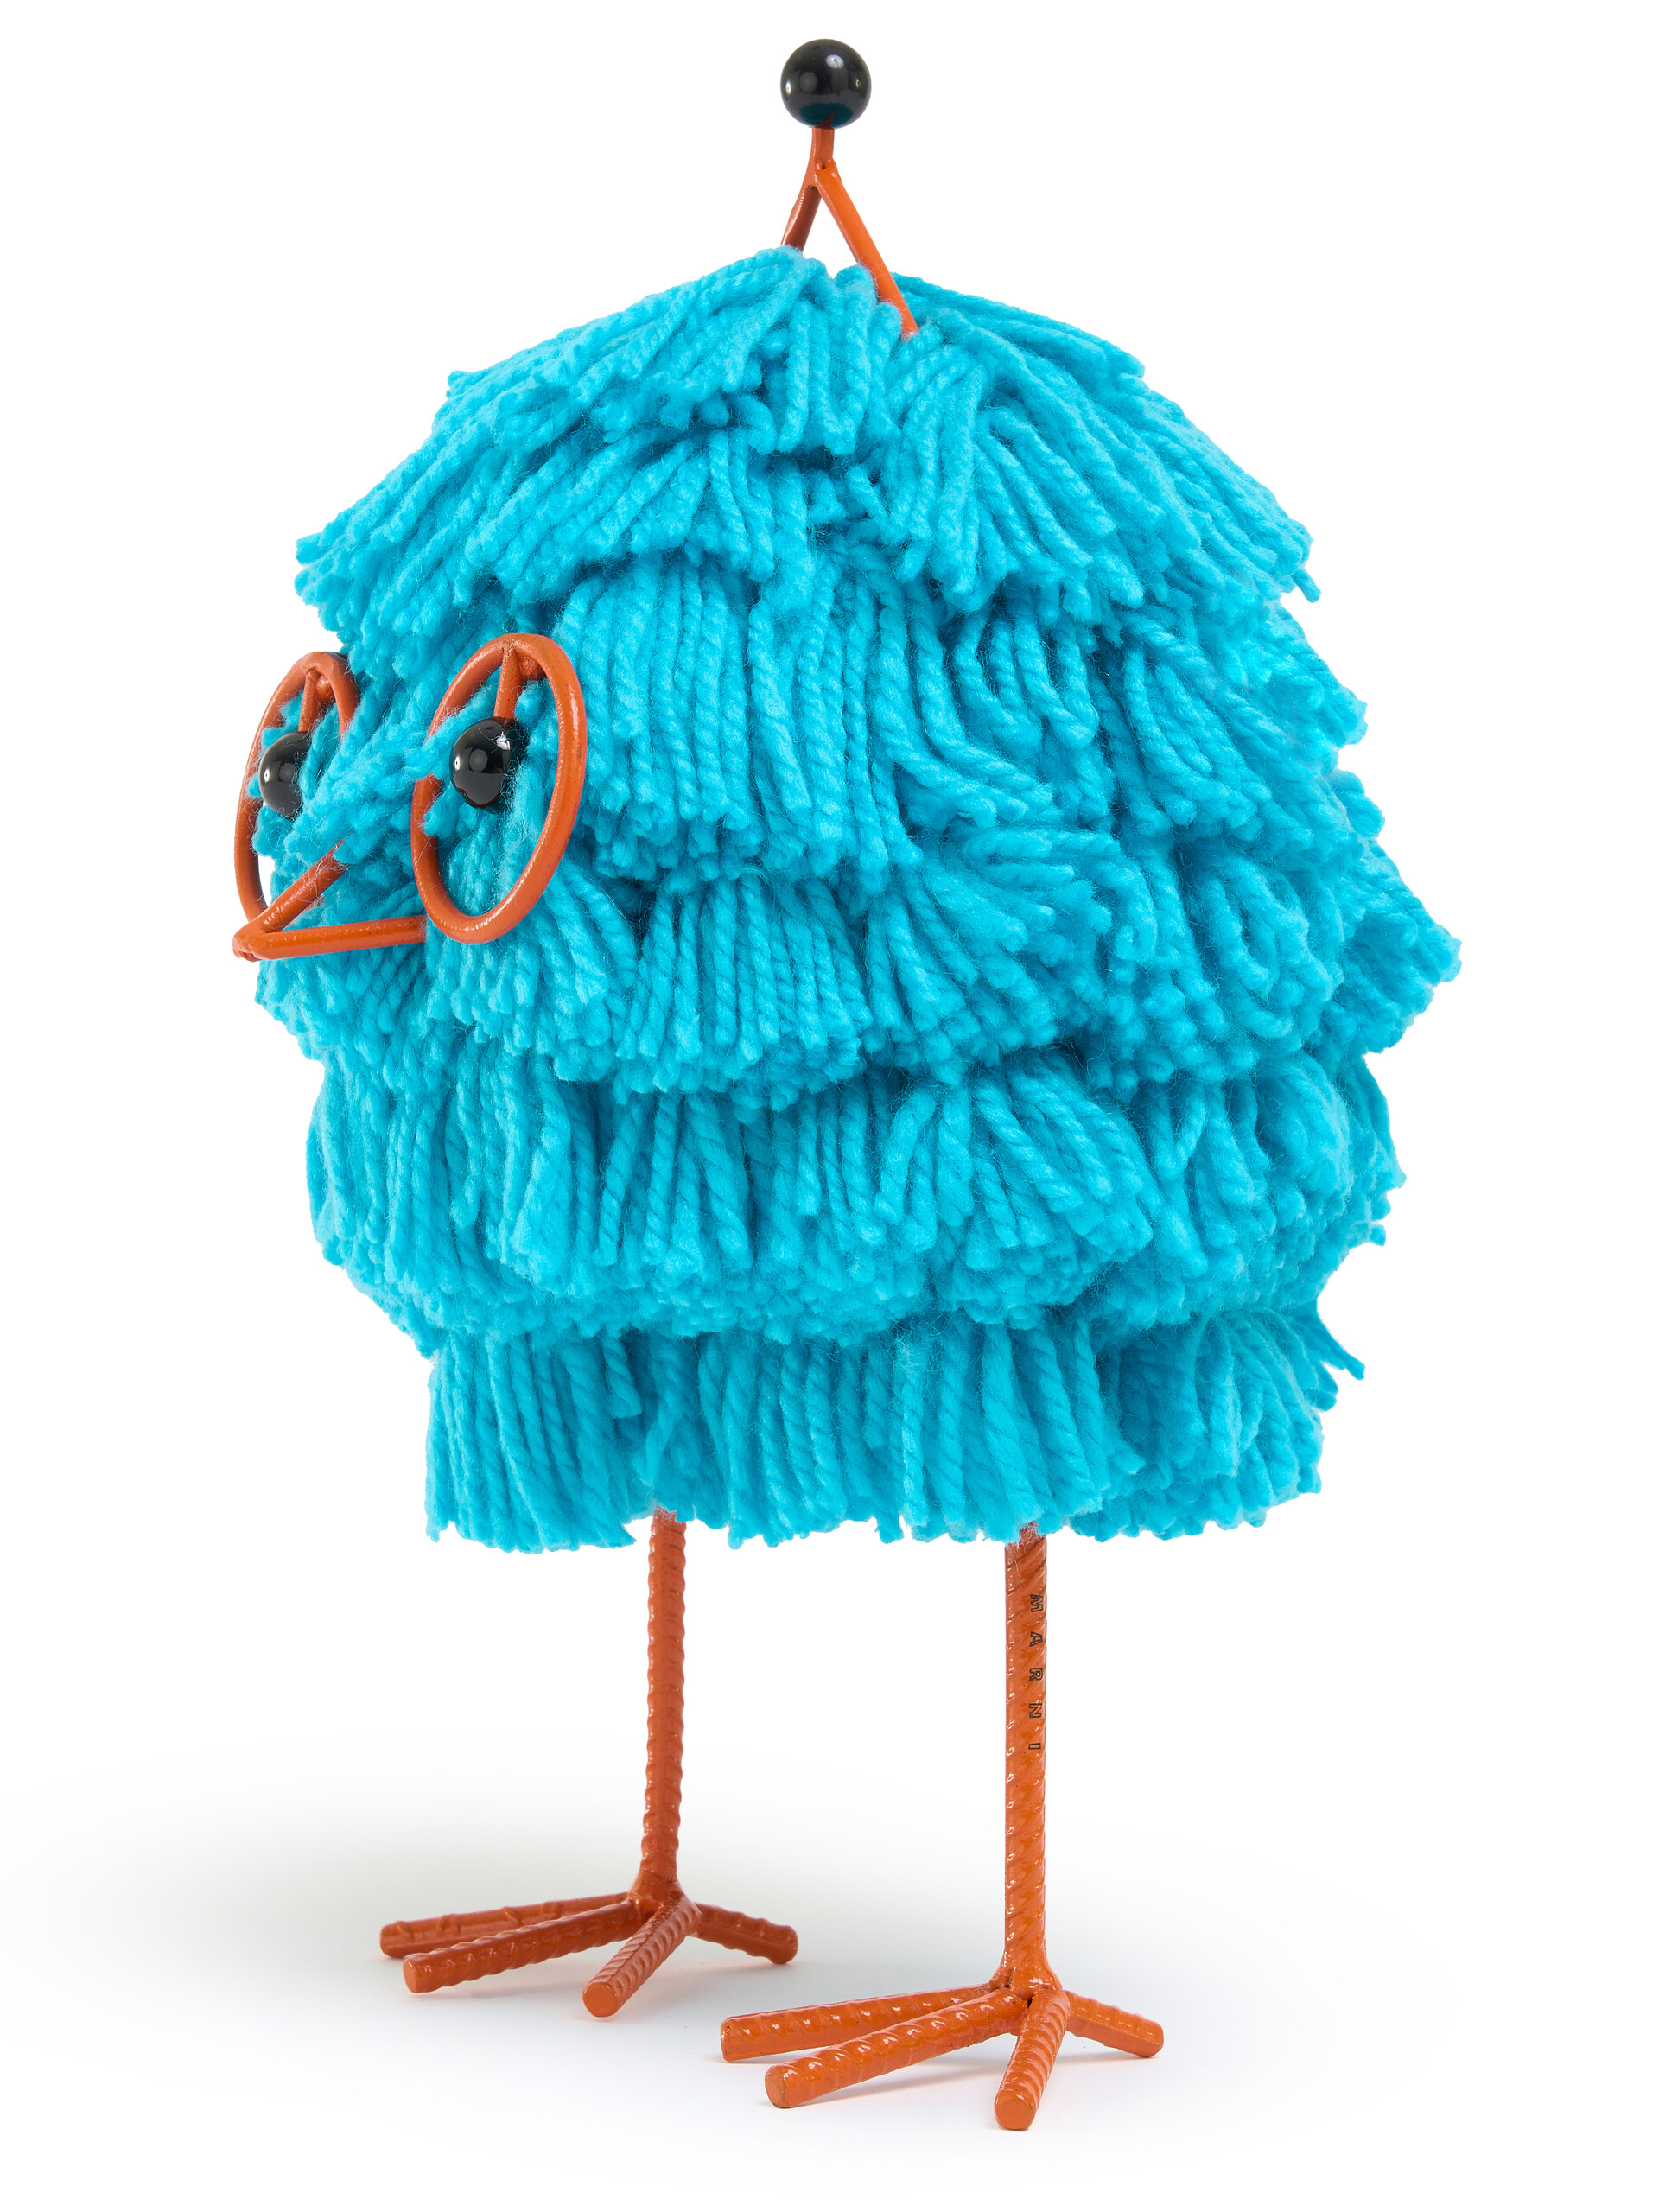 Woolly Friend "Abelo" Pequeño Azul Claro - Accesorios - Image 4